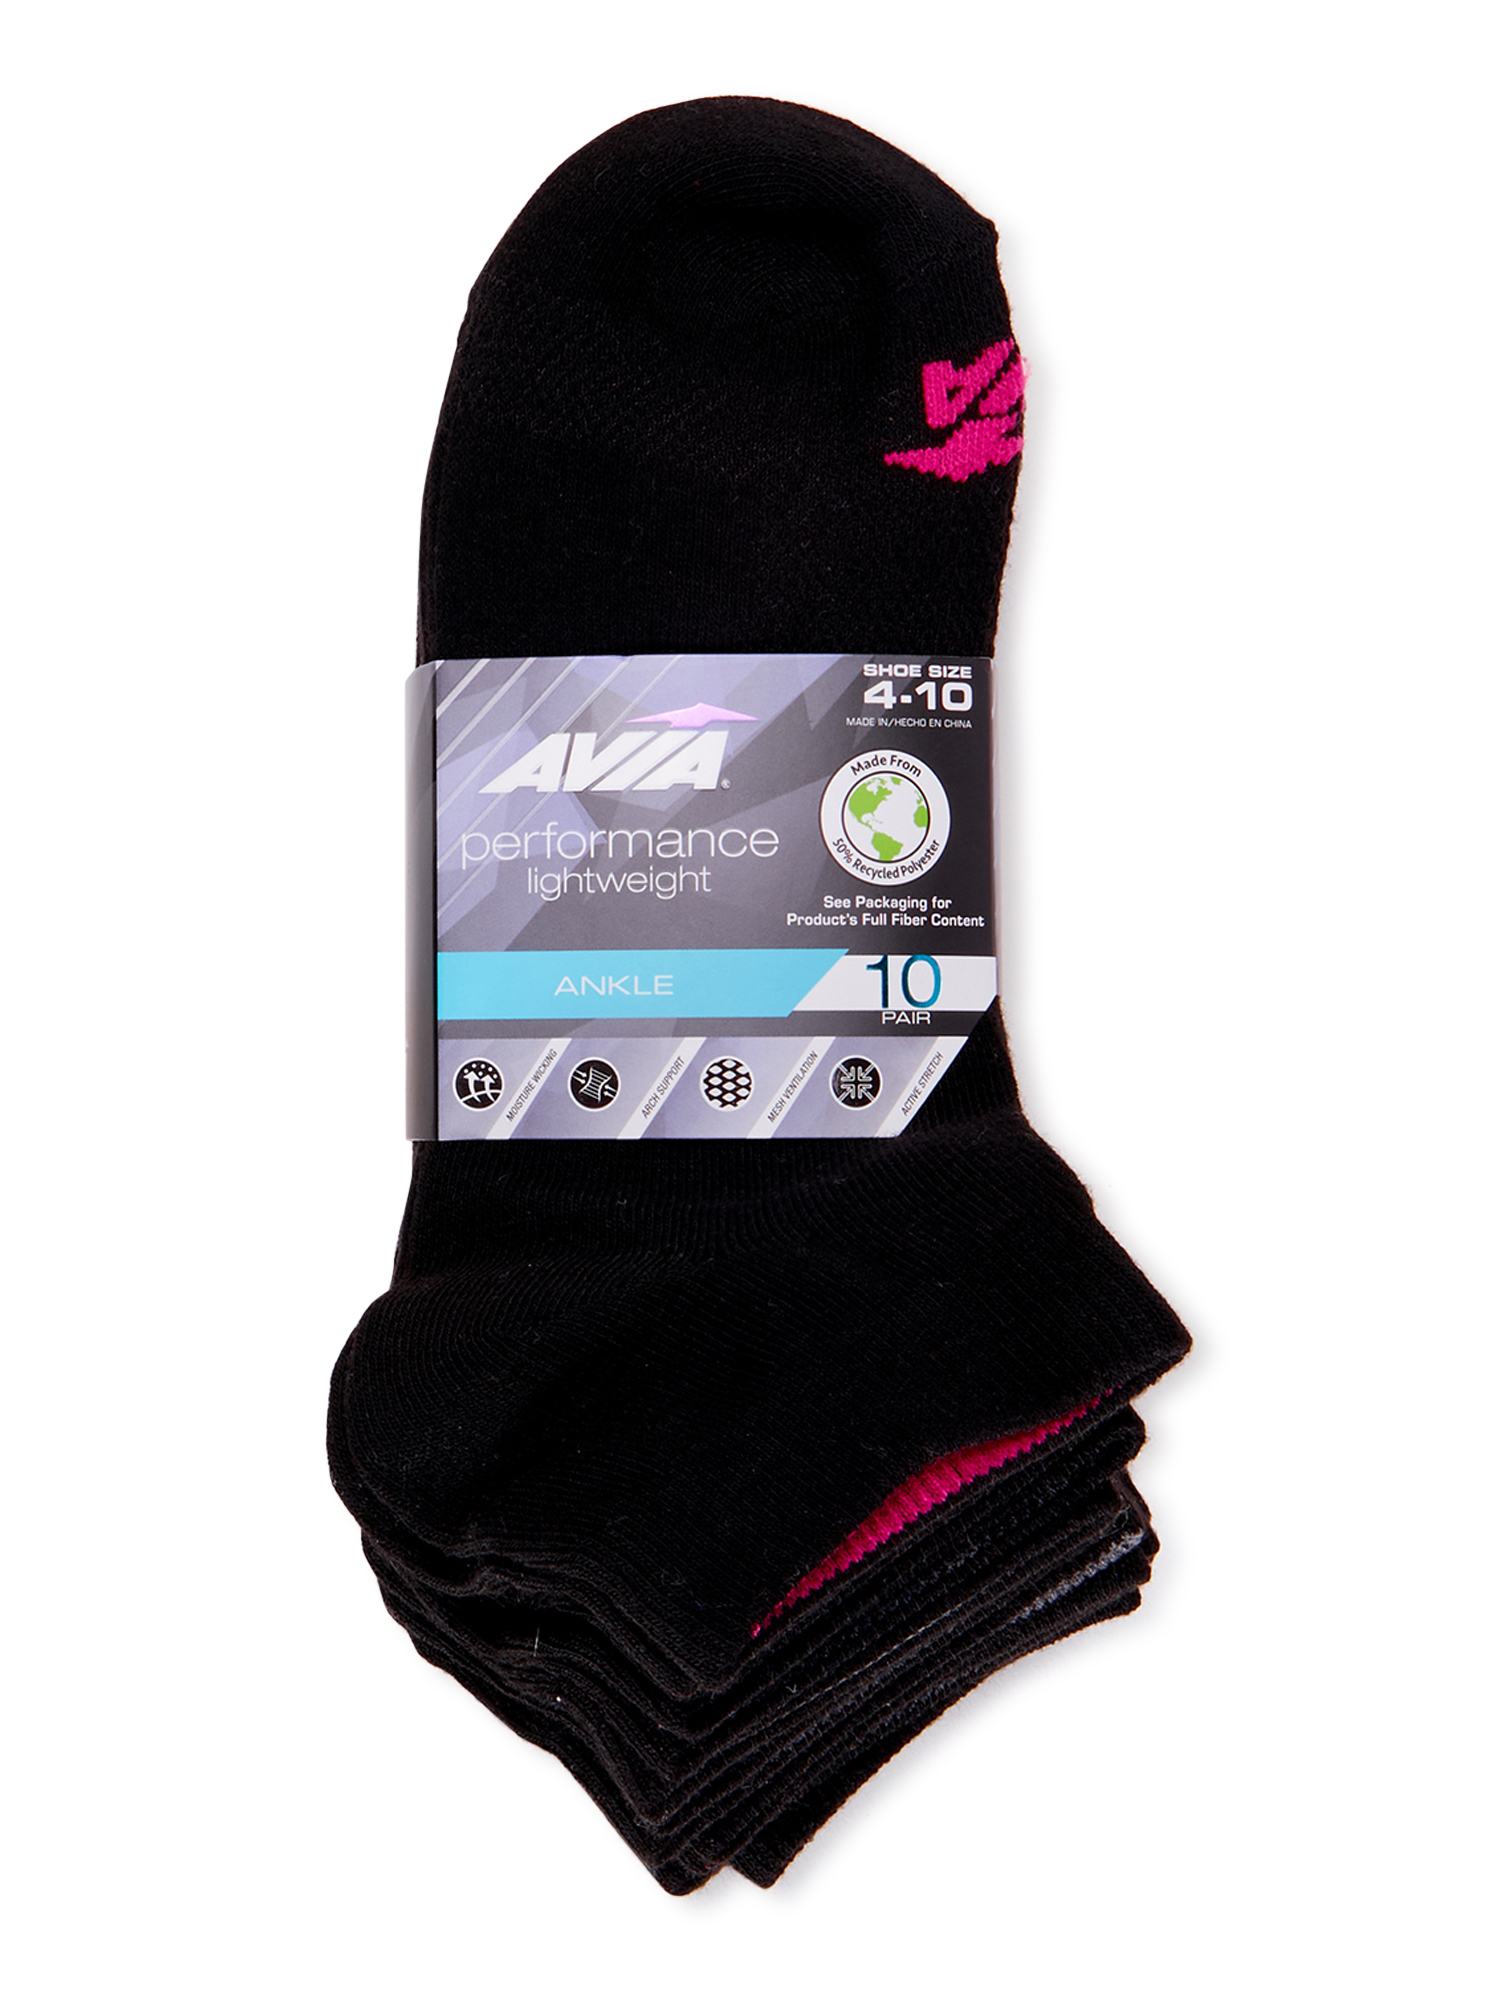 Avia Women's Cushioned Low Cut Socks, 14-Pack 